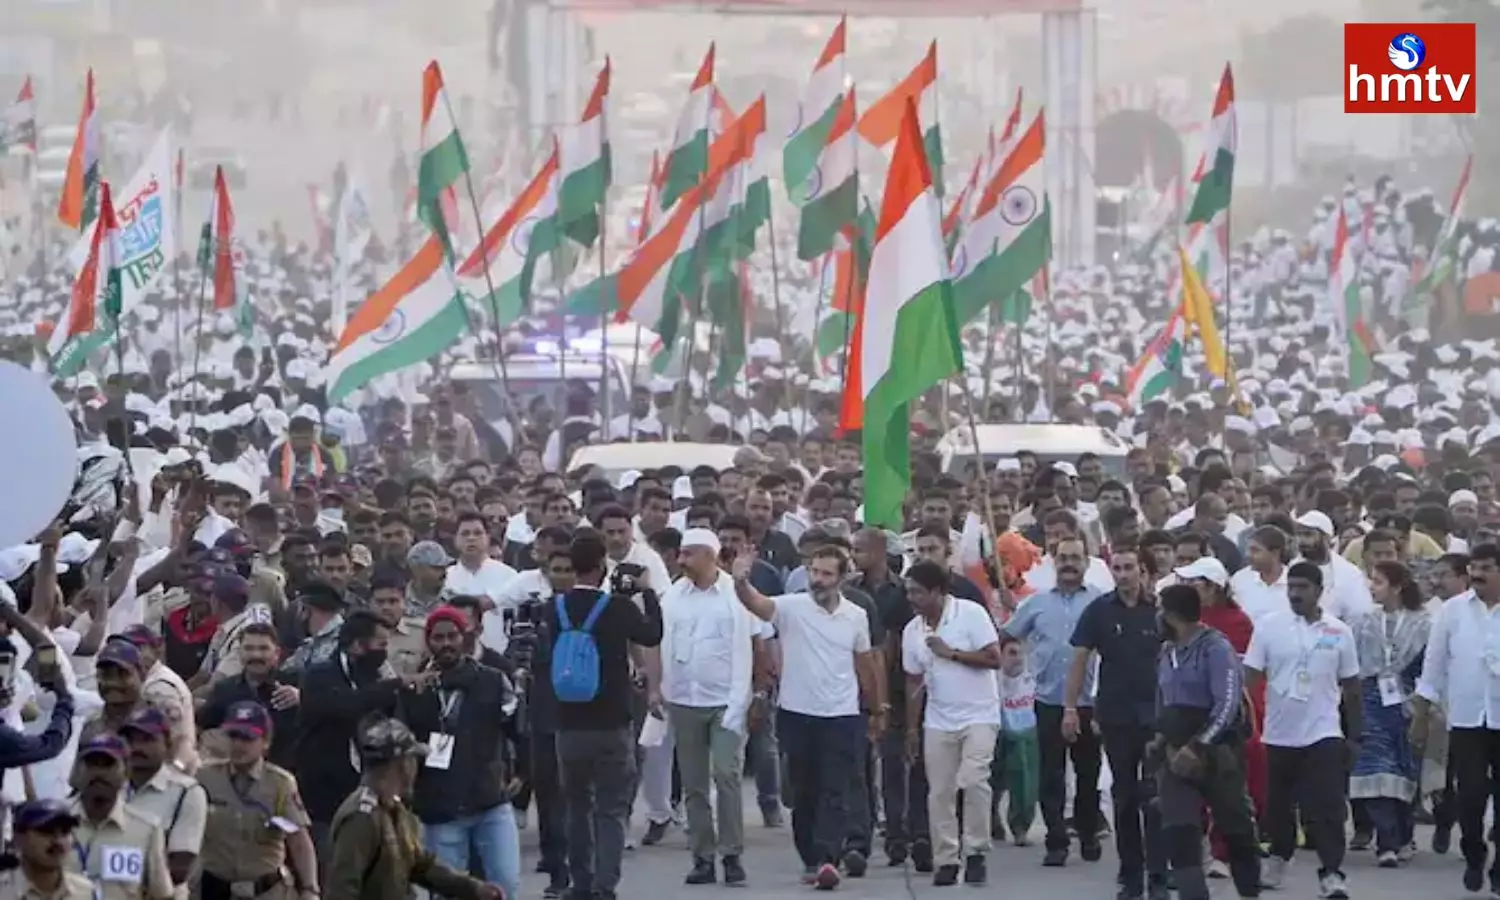 Rahul Gandhi March has resumed from Pathur in Maharashtra